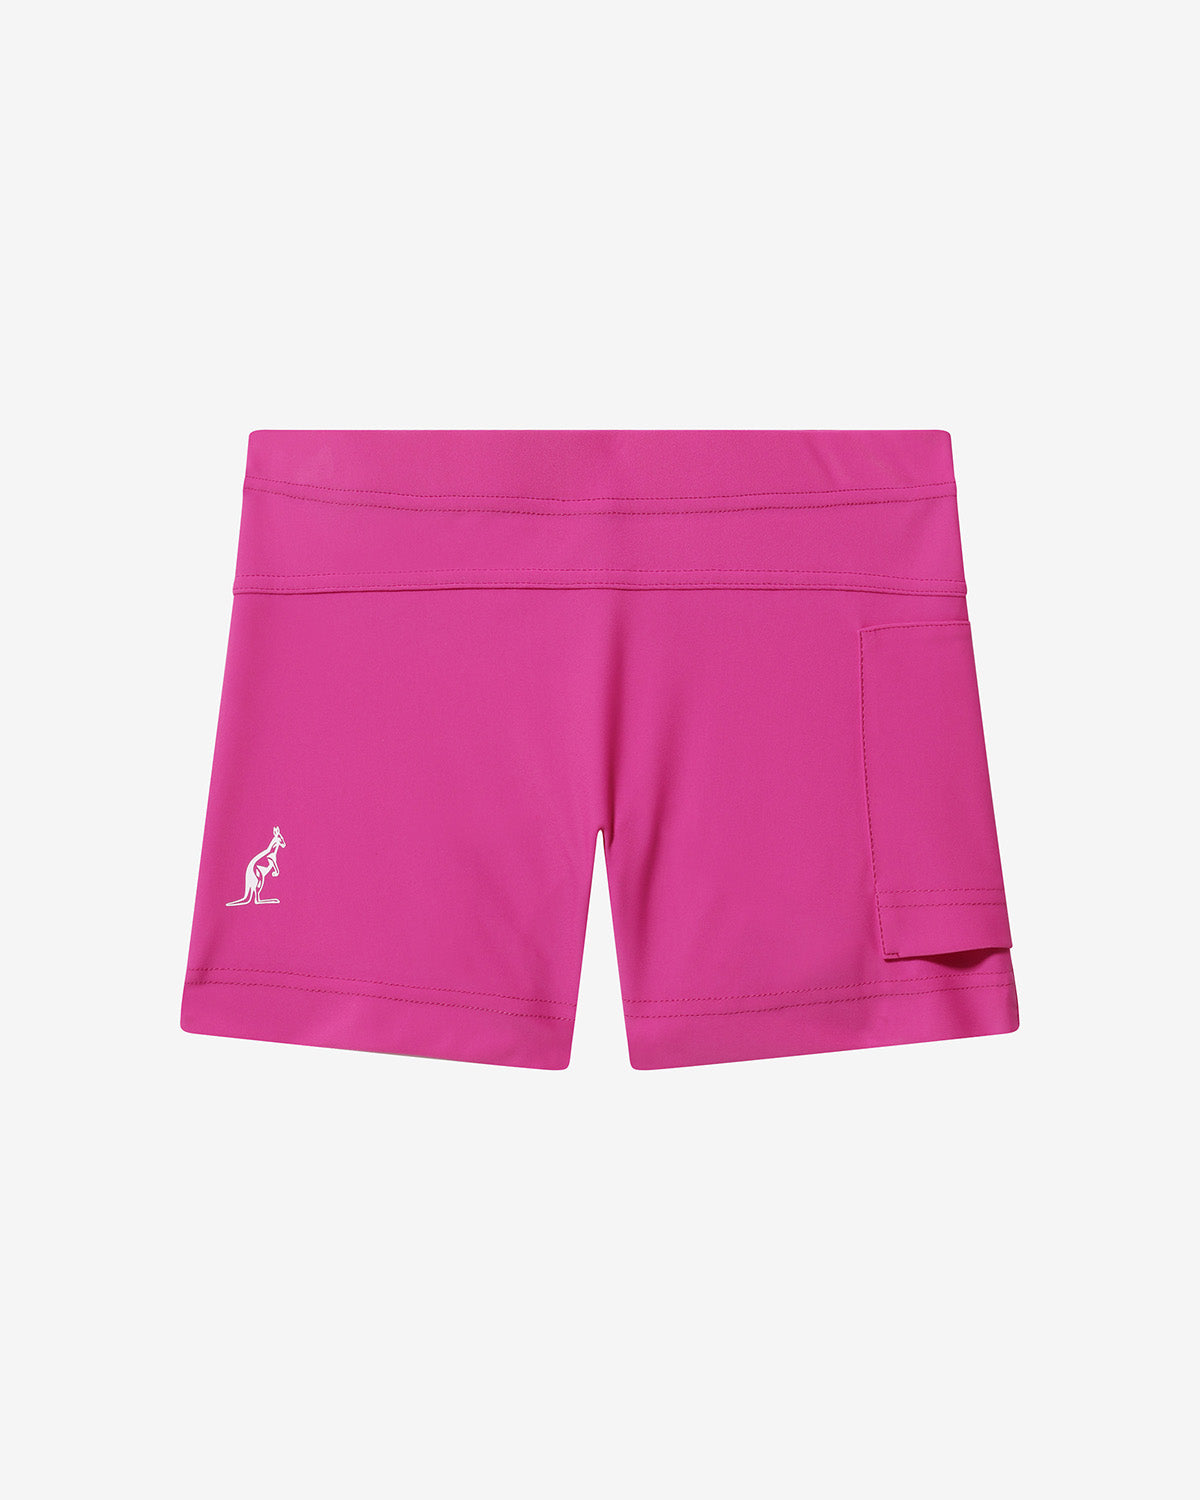 Essence Shorts: Australian Tennis